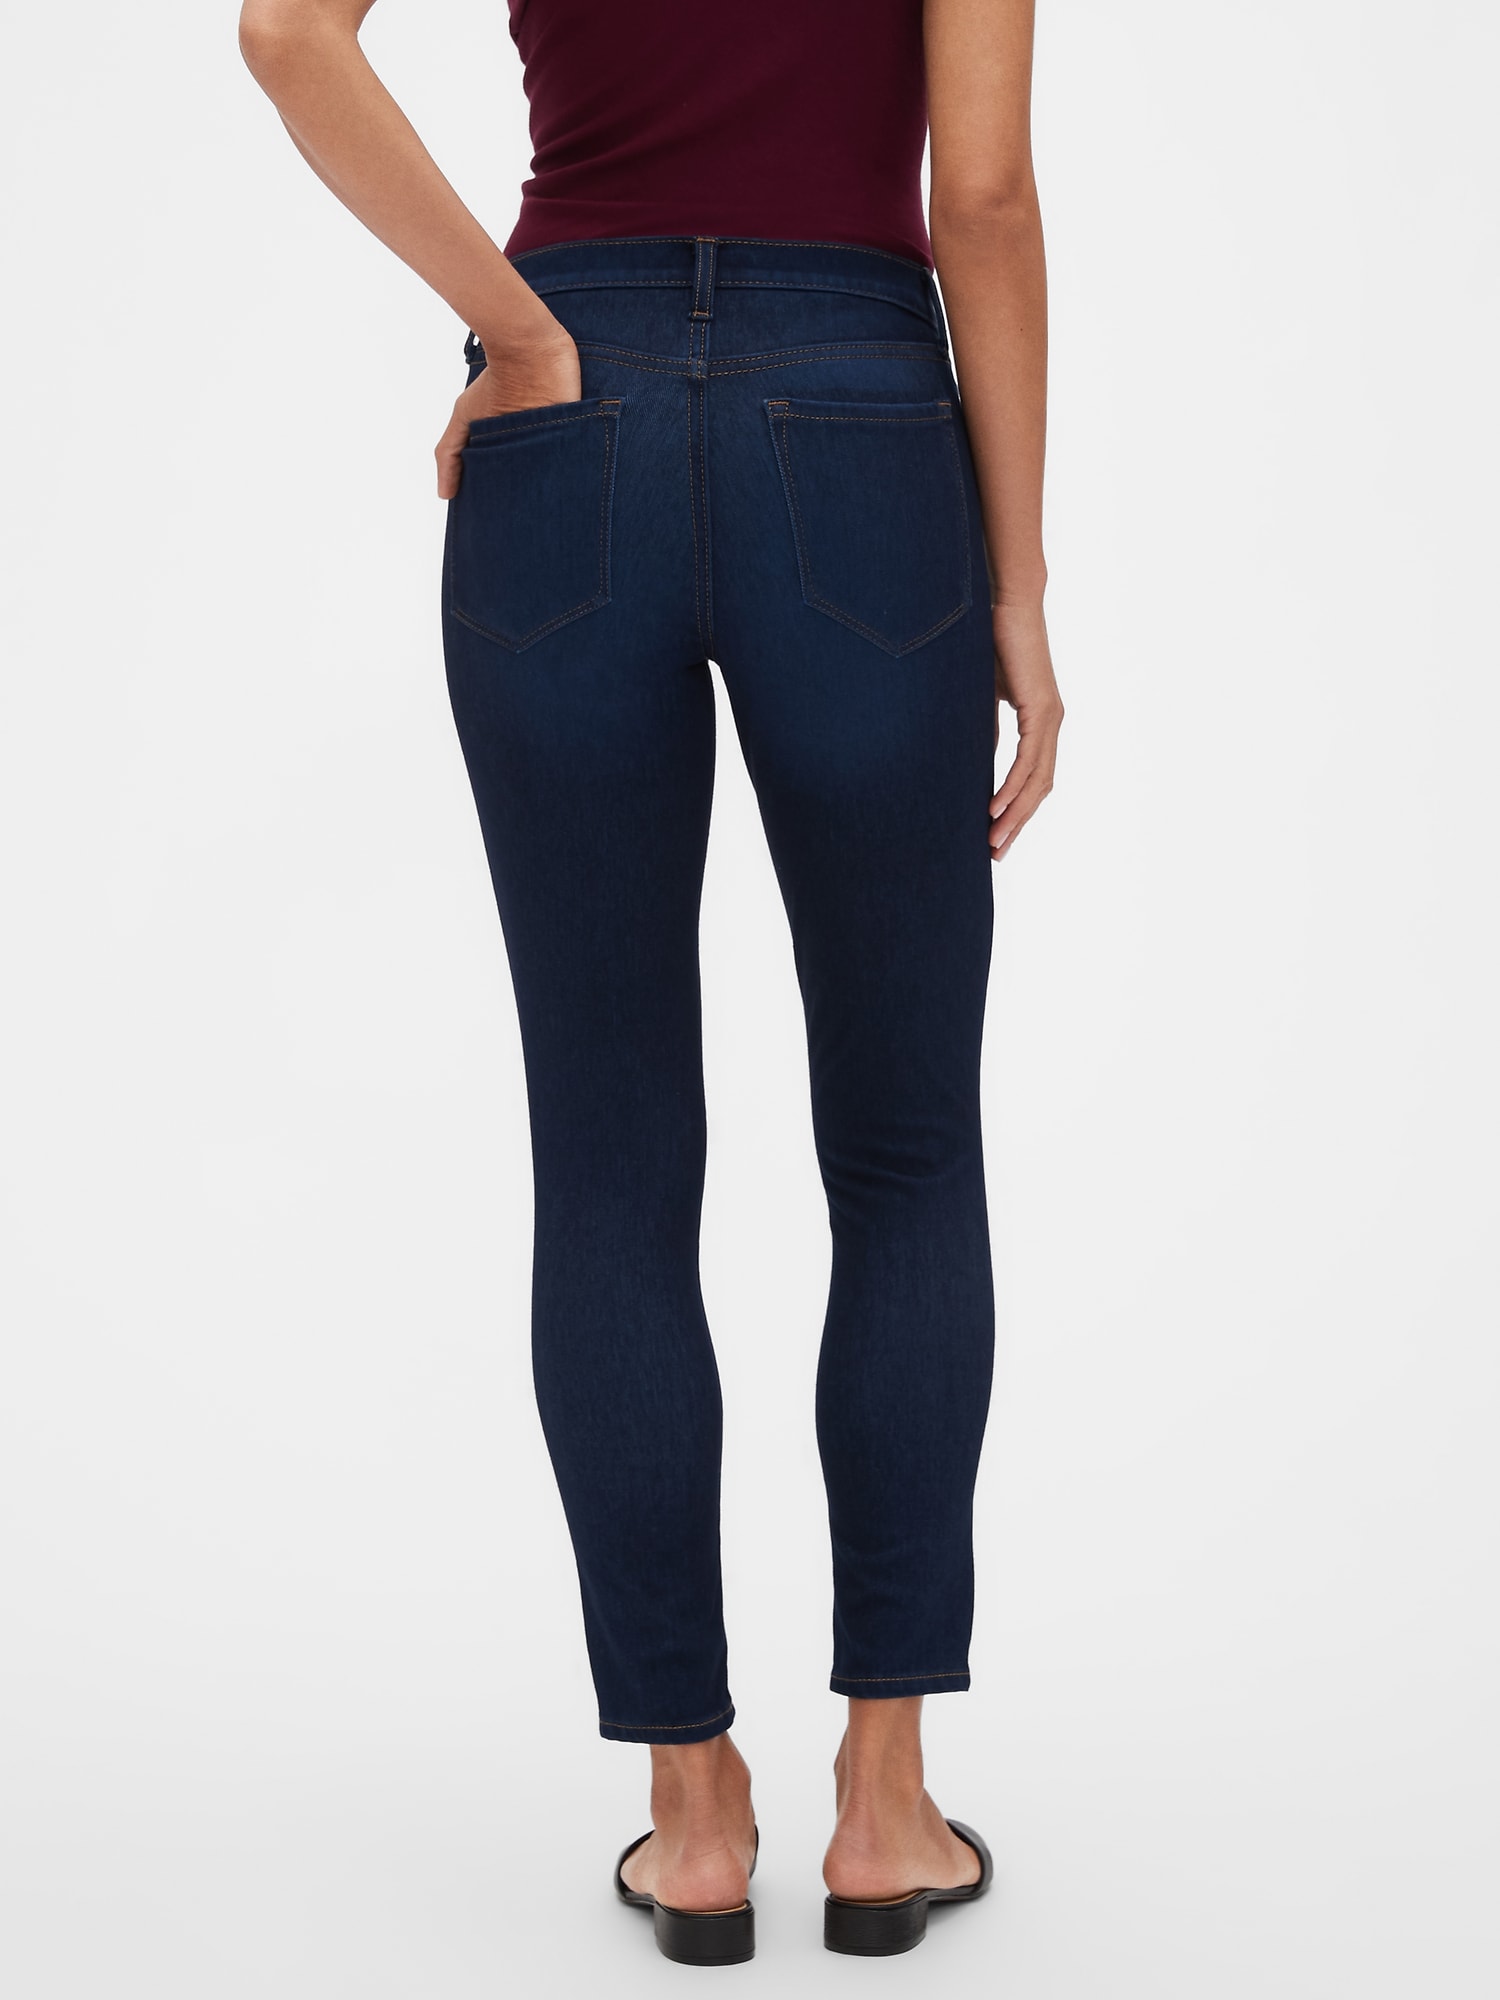 women's petite stretch jeans